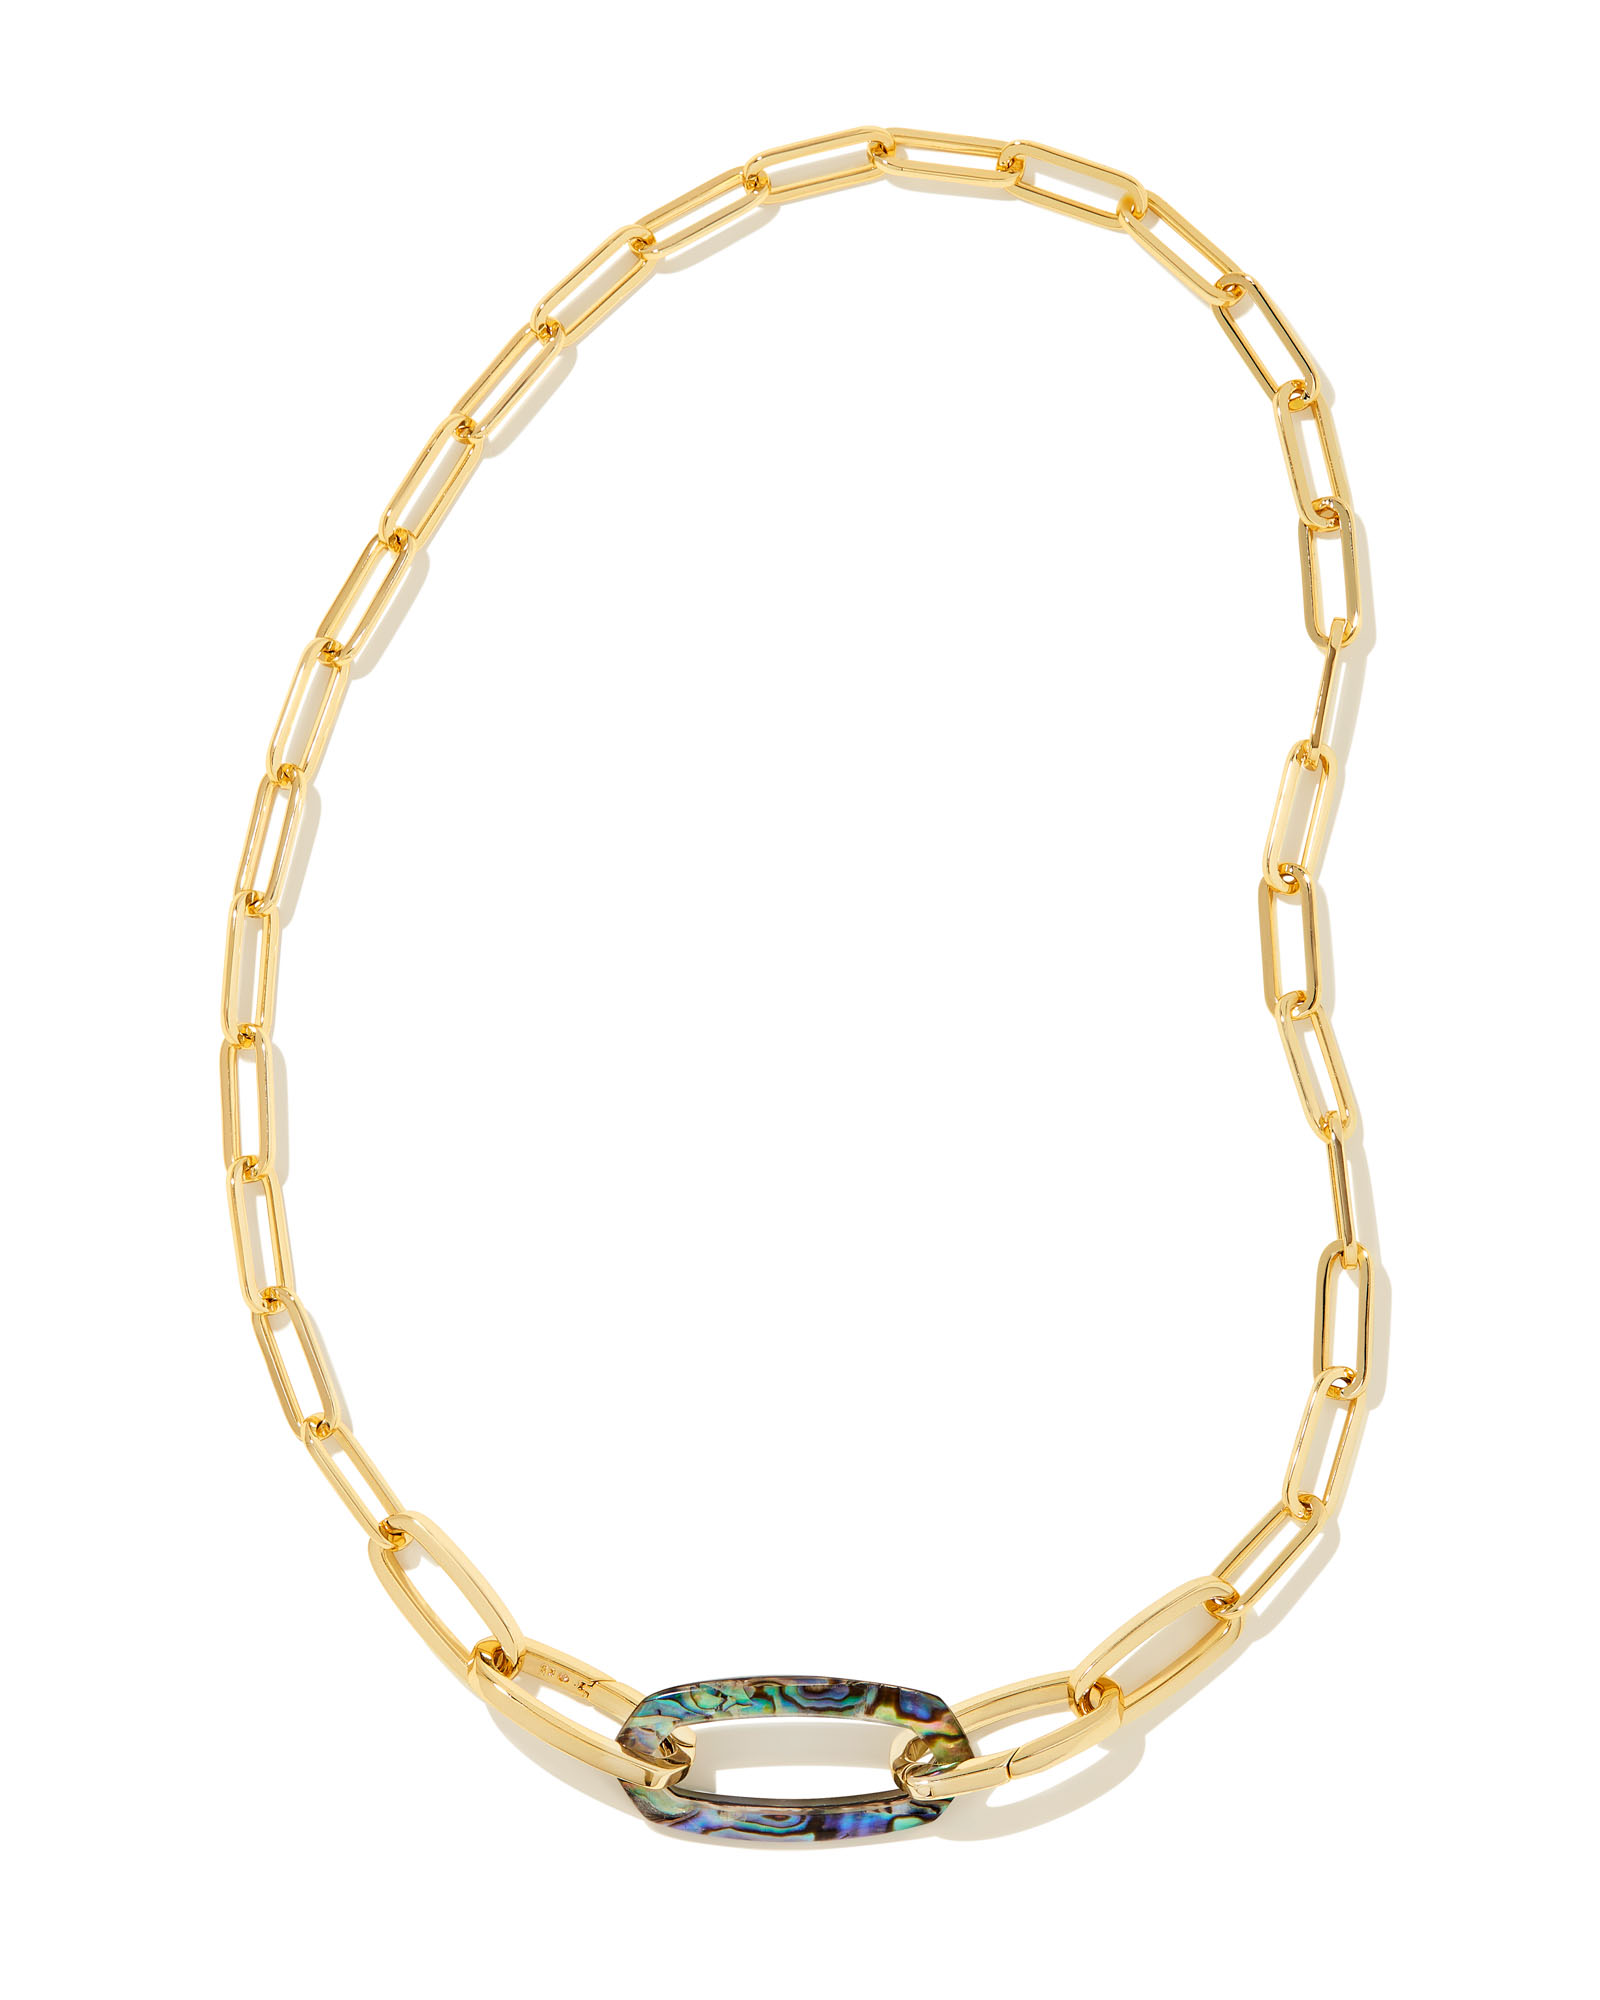 Necklace separator – Katyb Jewellery Design